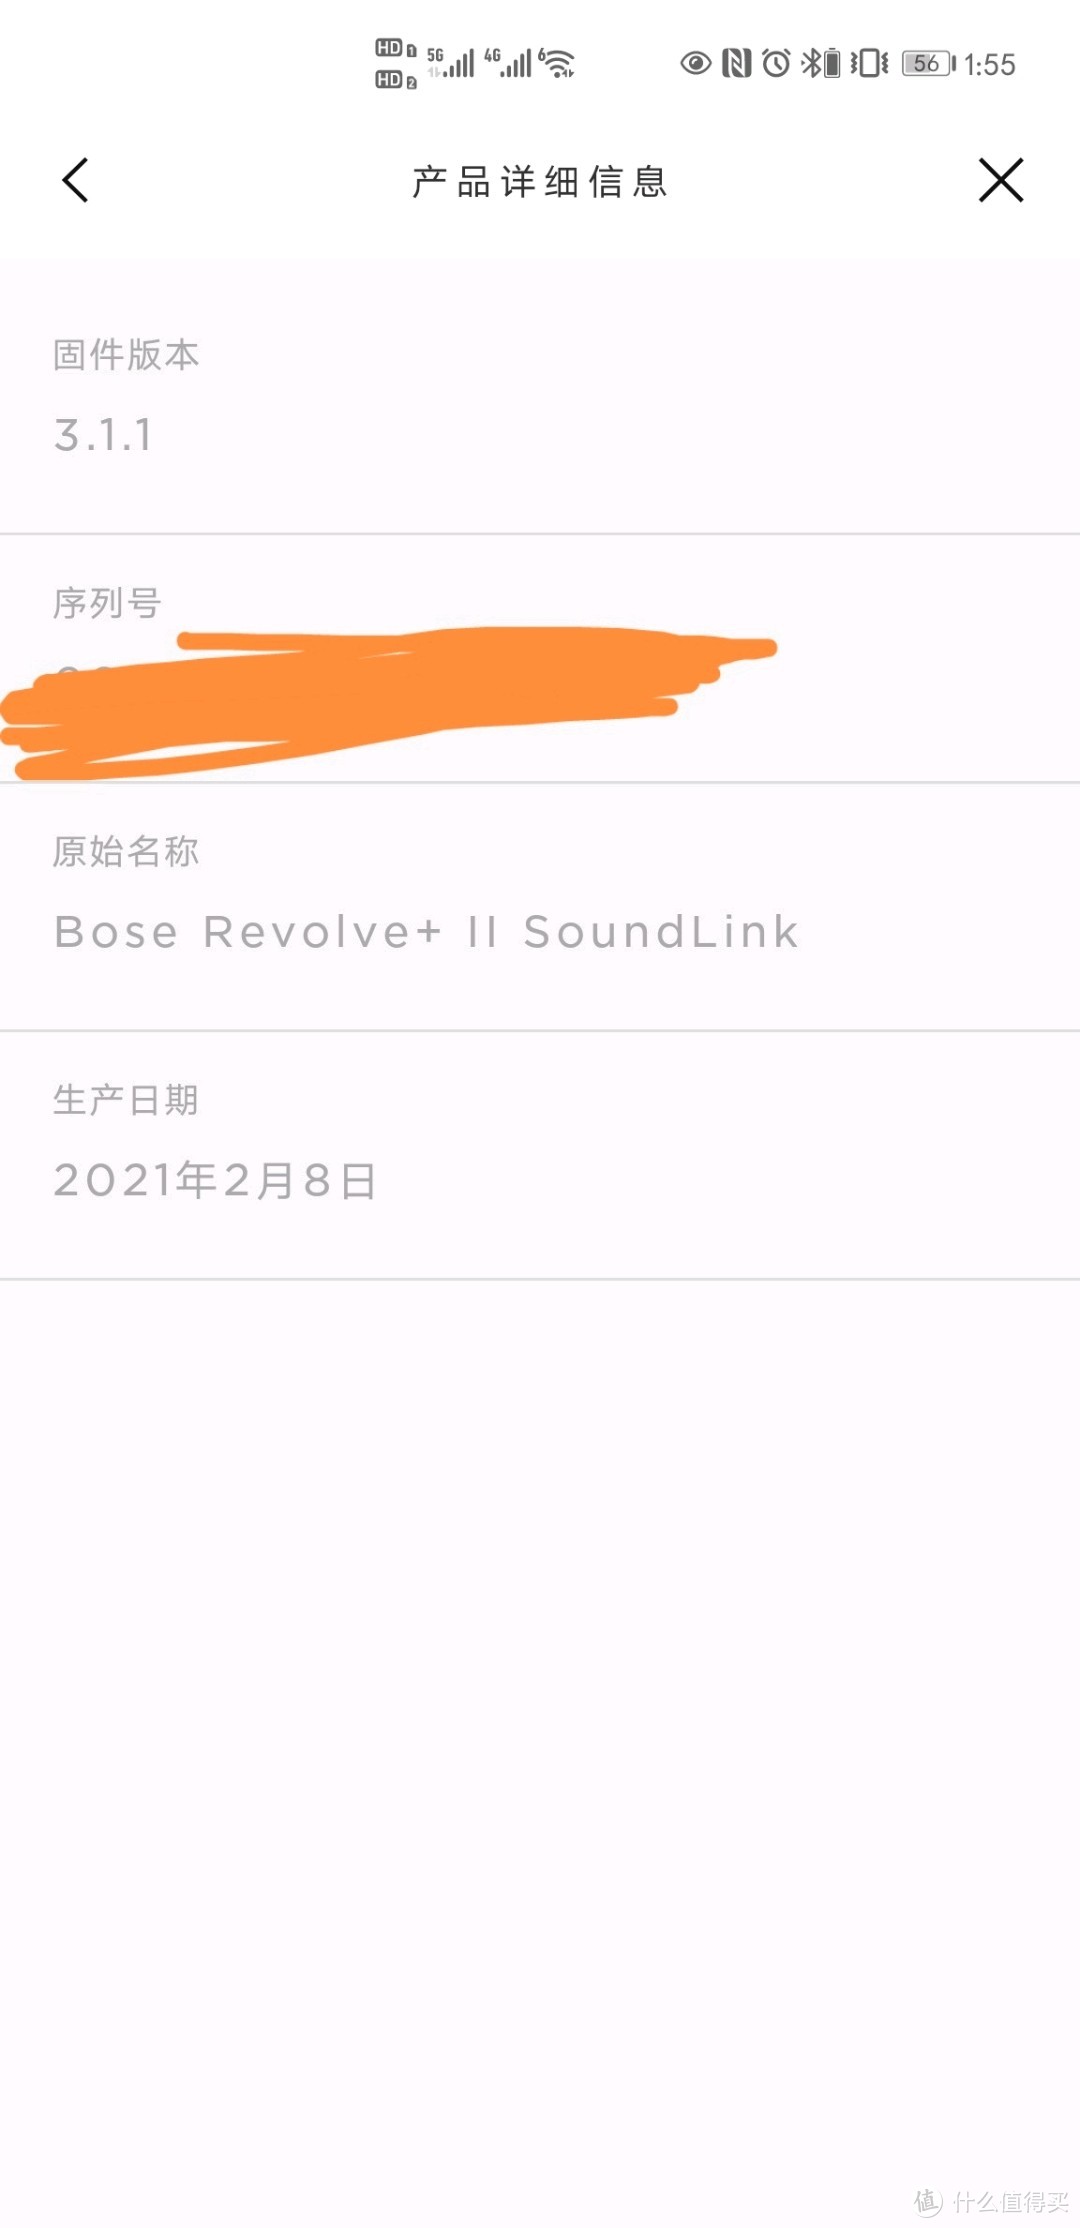 Bose SoundLink Revolve+ II 大水壶二代入手